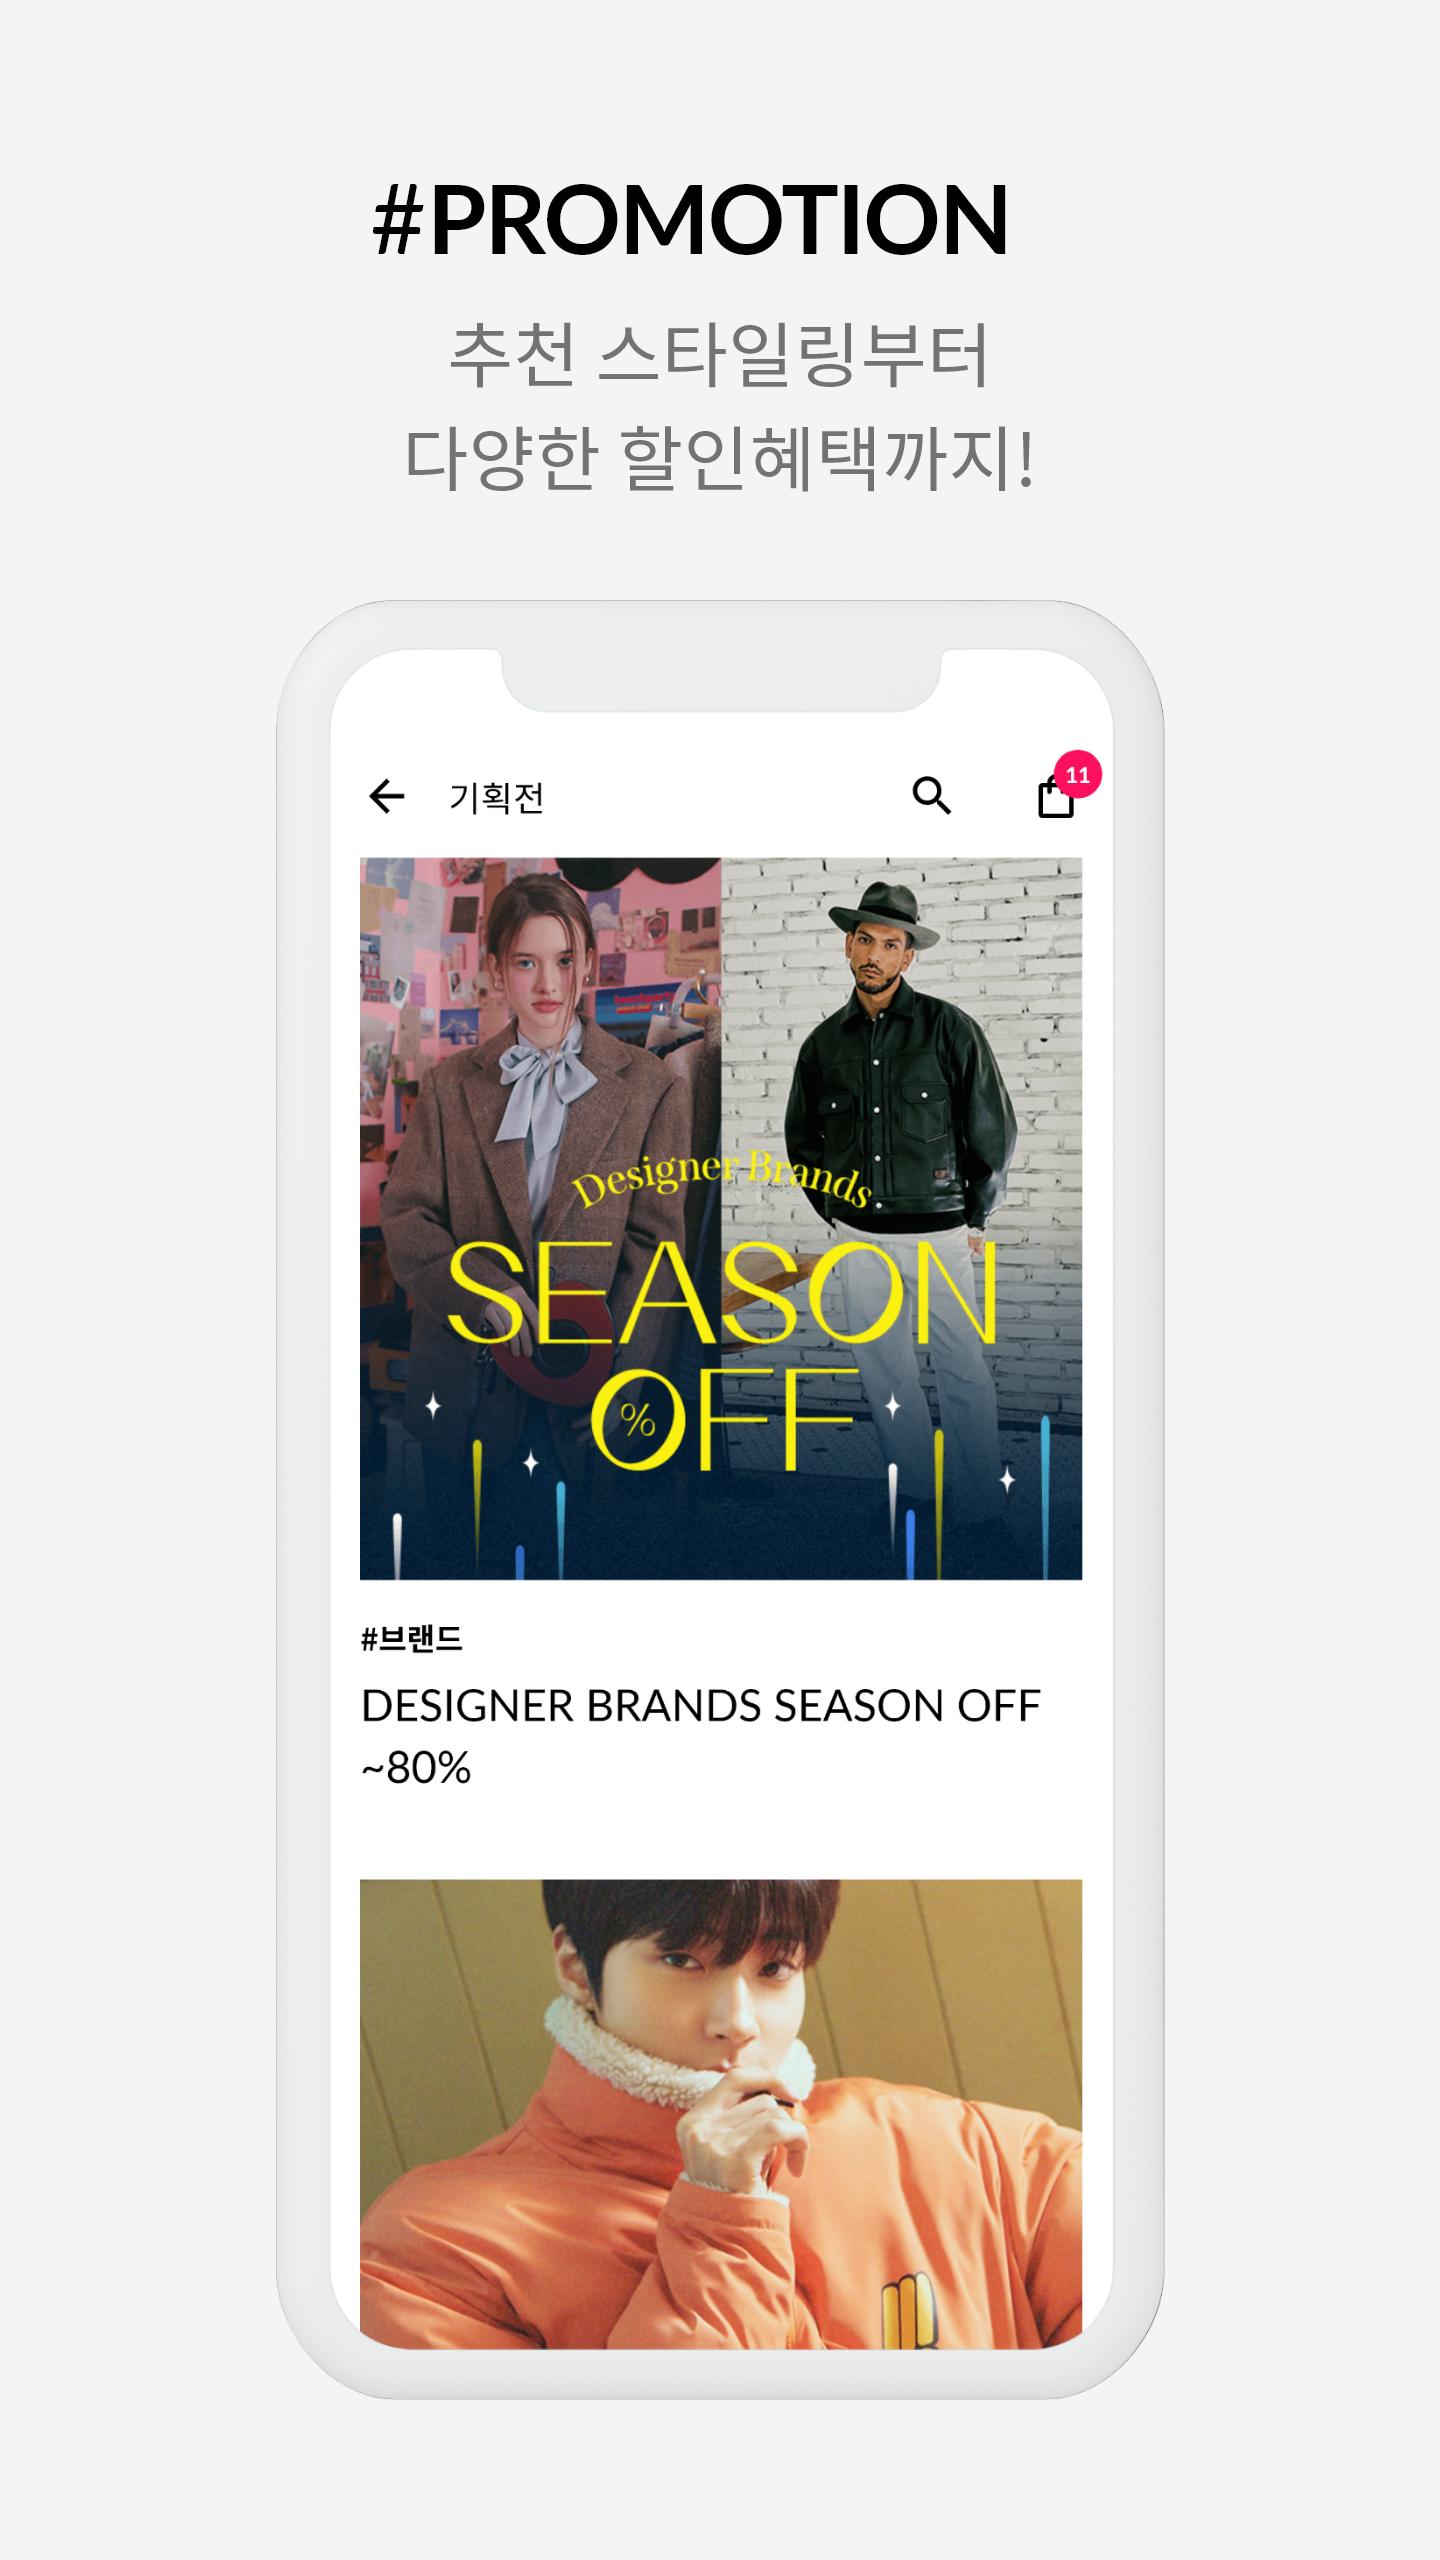 Apk Showindow – 신원 공식 온라인 쇼핑몰 쑈윈도 Untuk Muat Turun Android